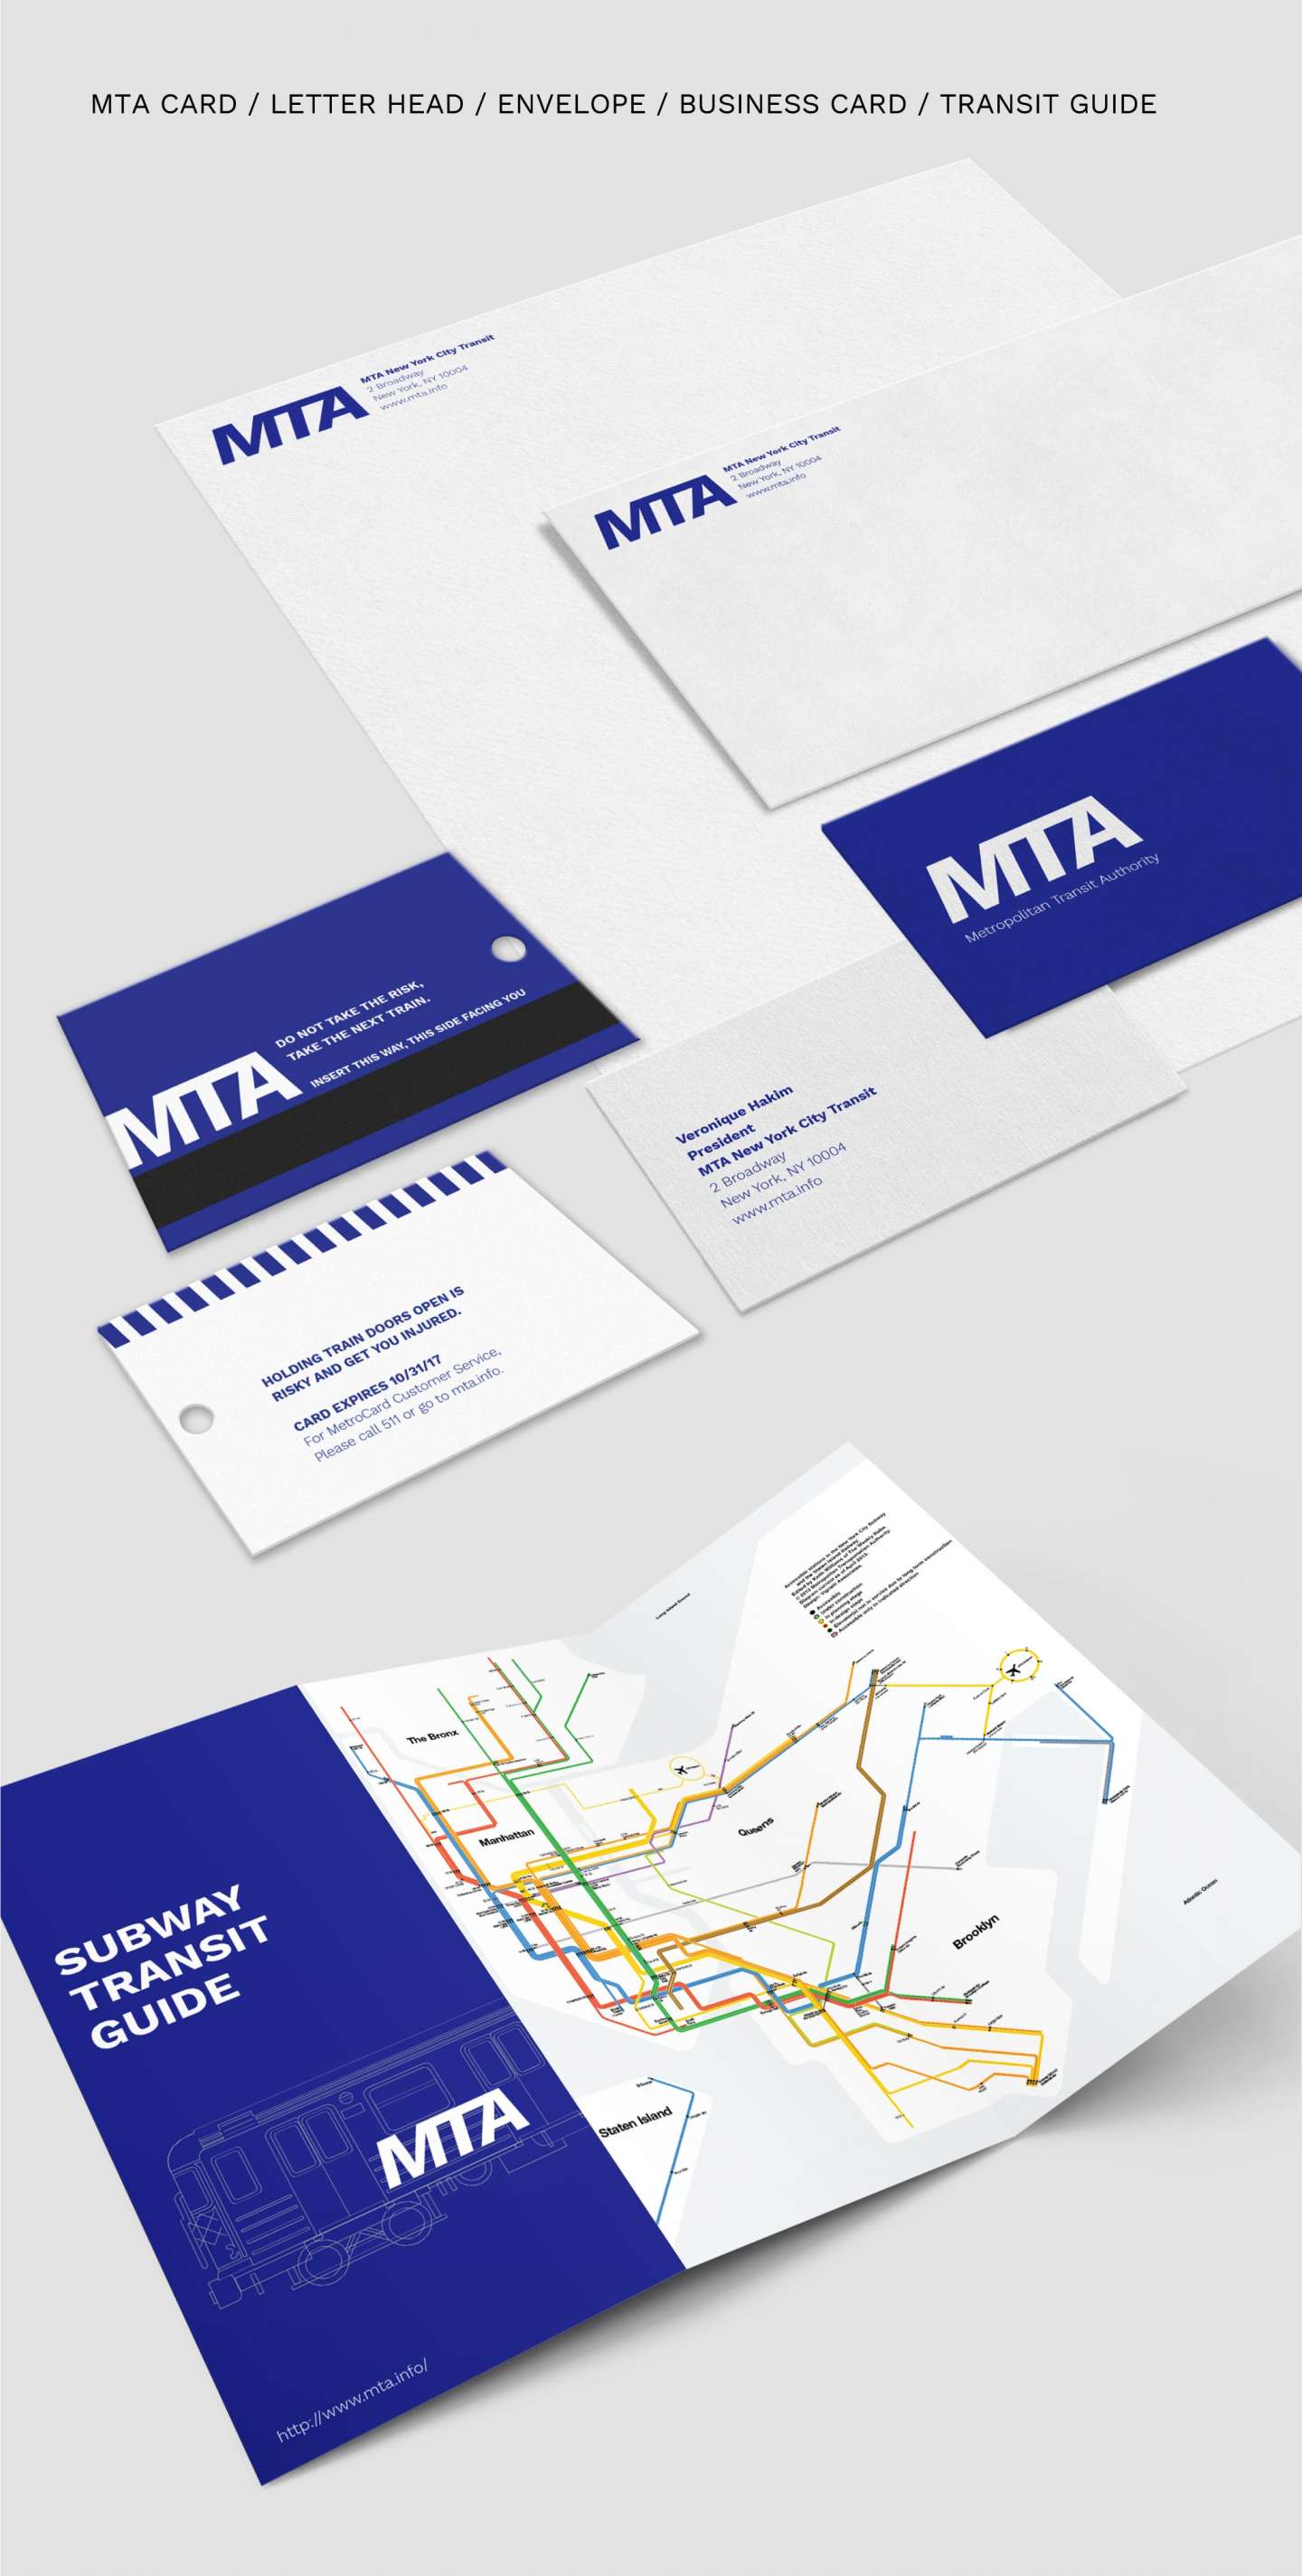 MTA (Metropolitan Transit Authority) Rebrand